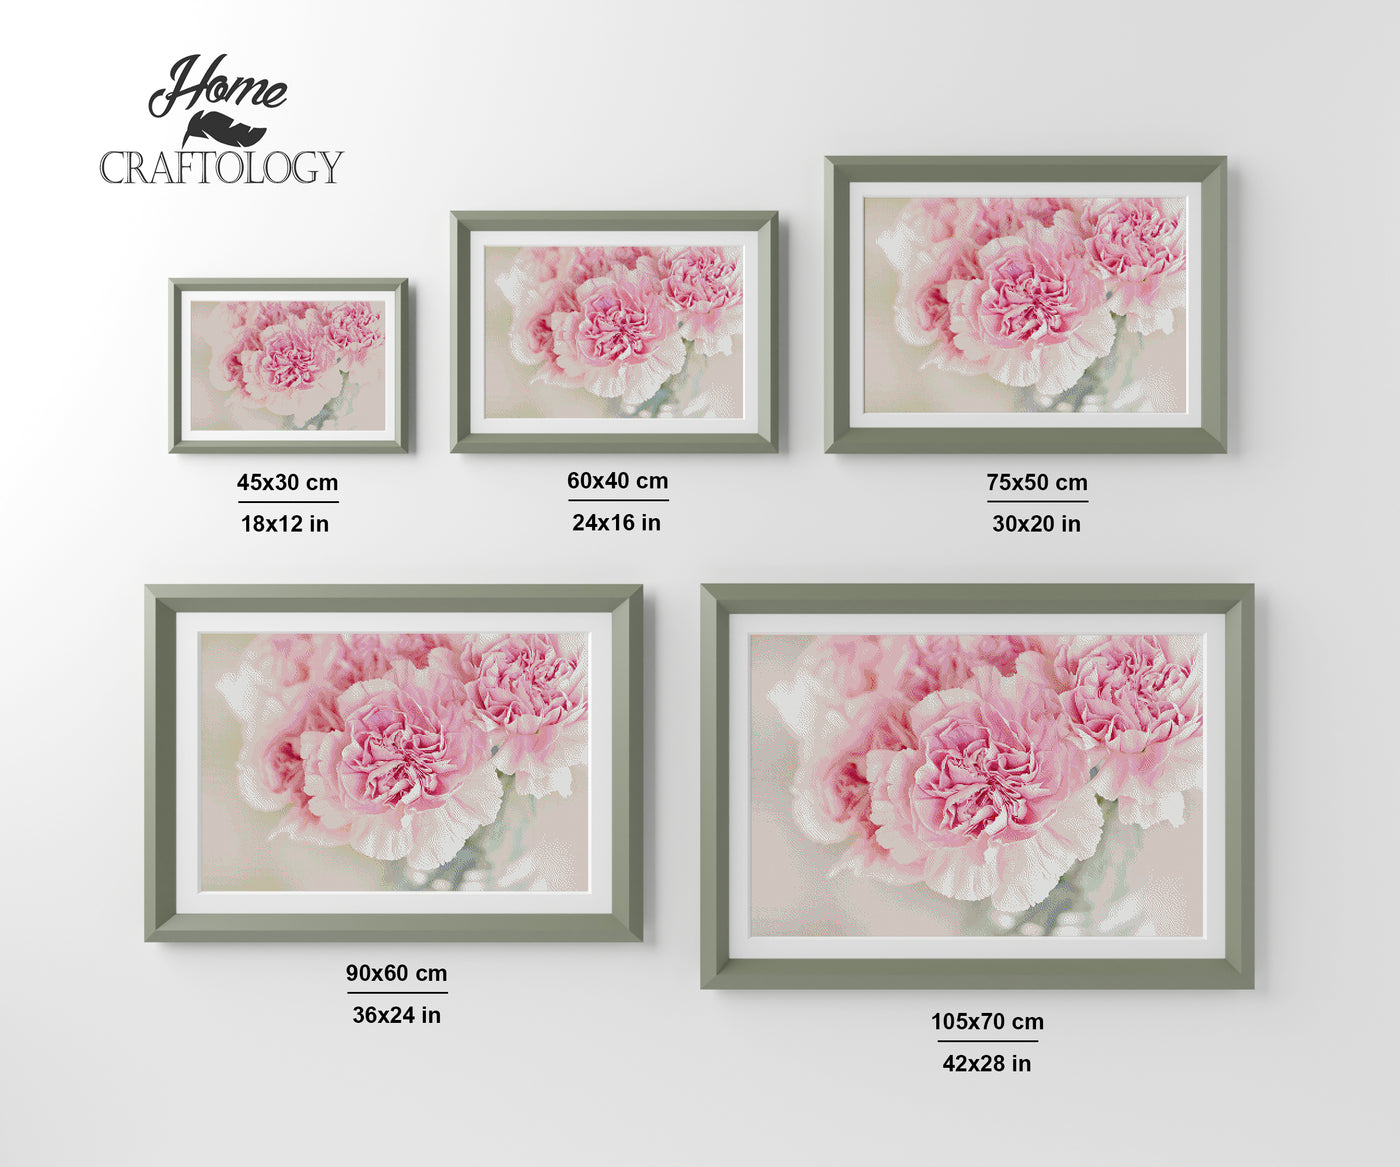 Beautiful Pink Carnation - Premium Diamond Painting Kit